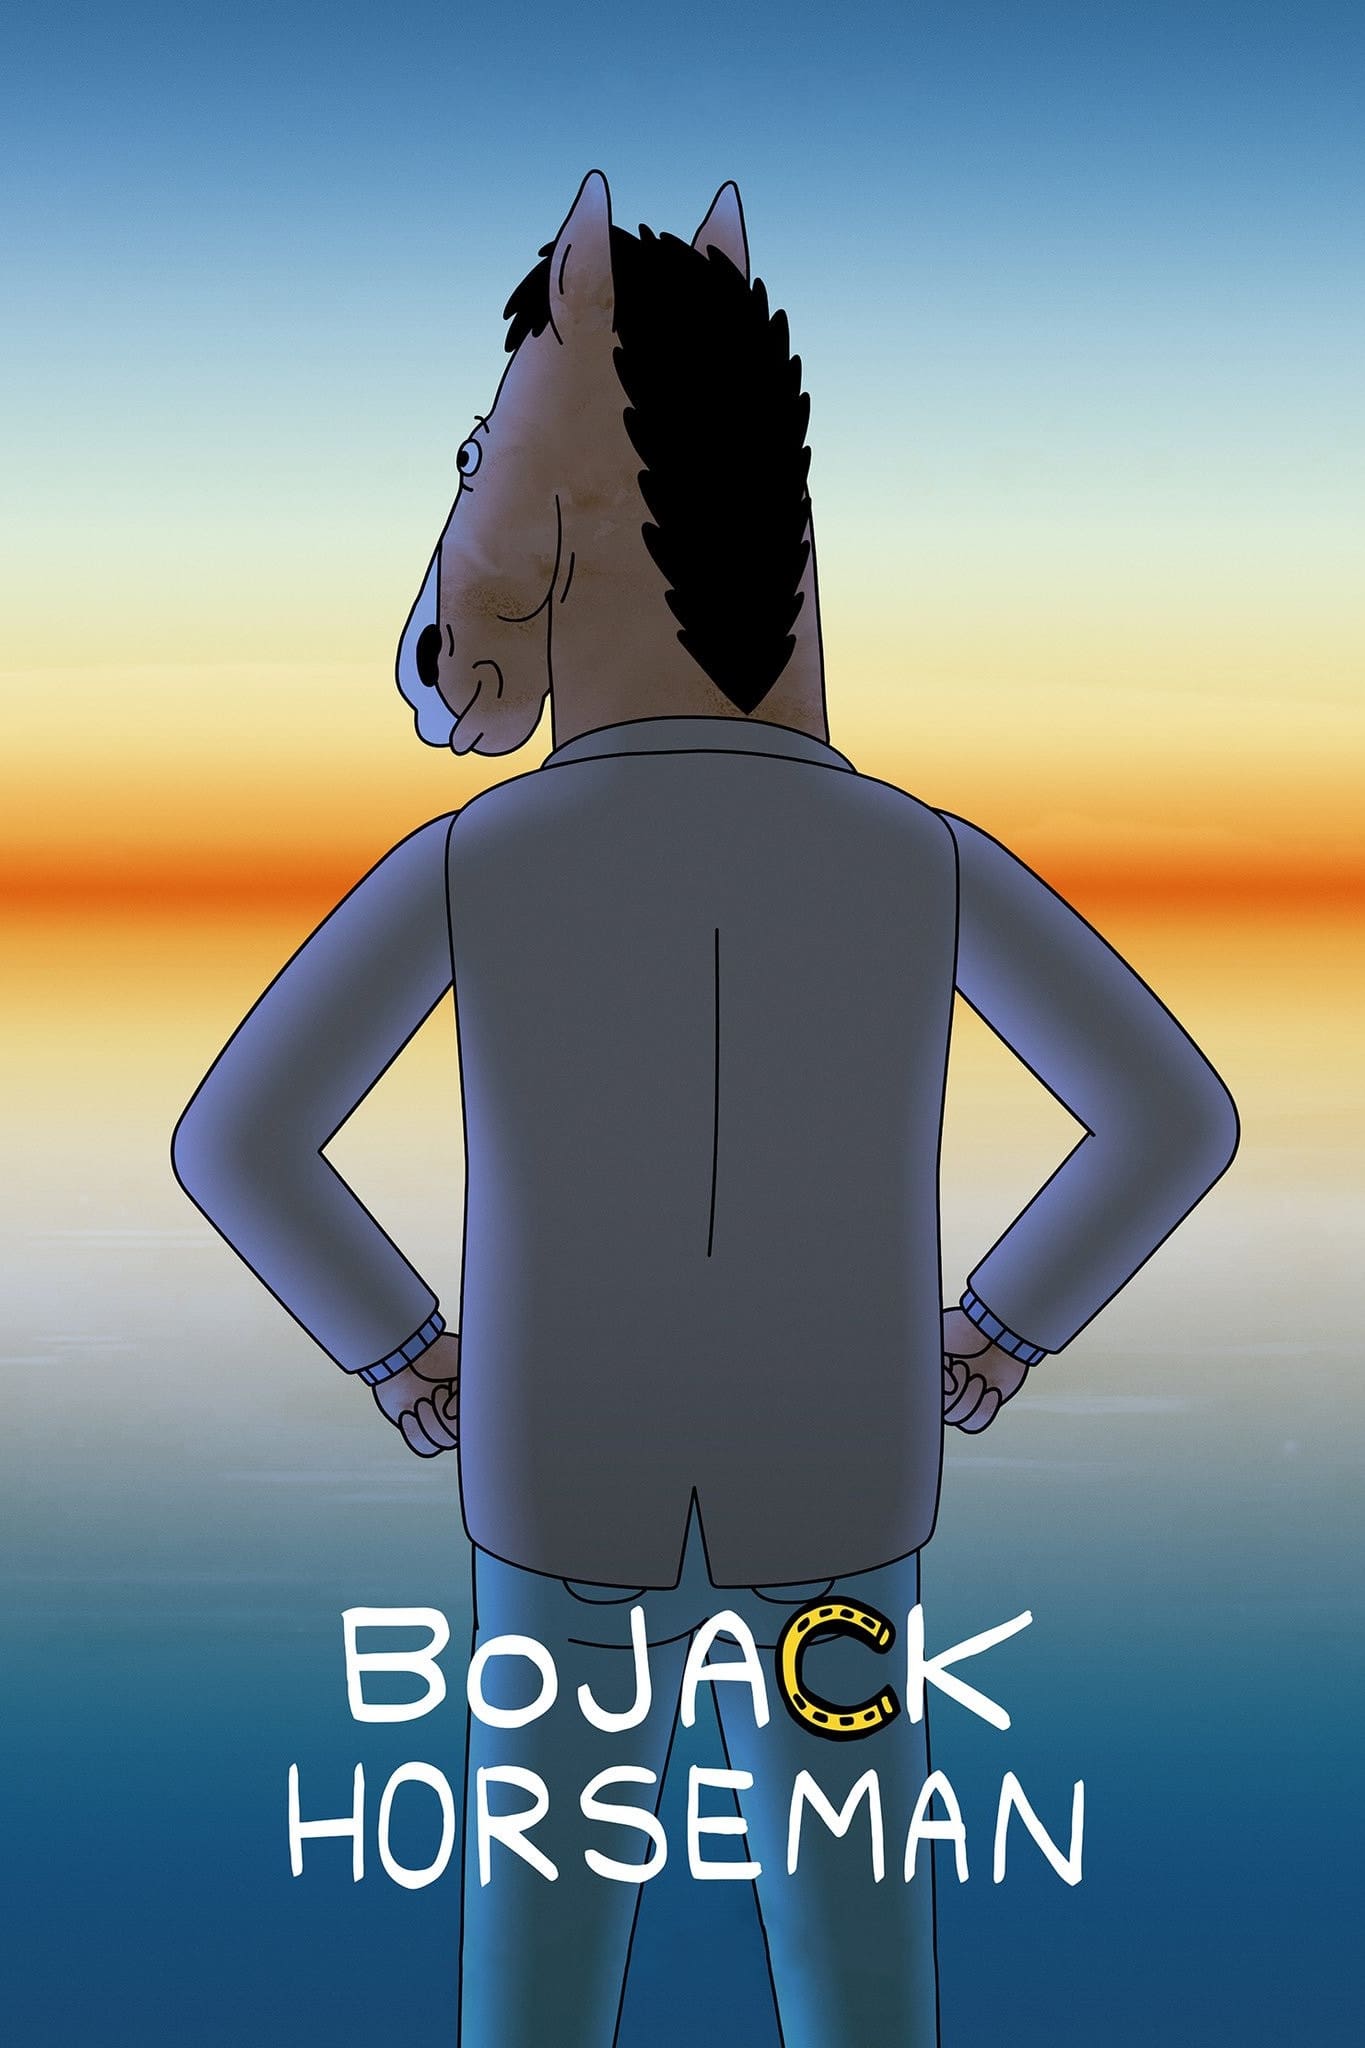 BoJack Horseman TV Shows About Hollywood Star